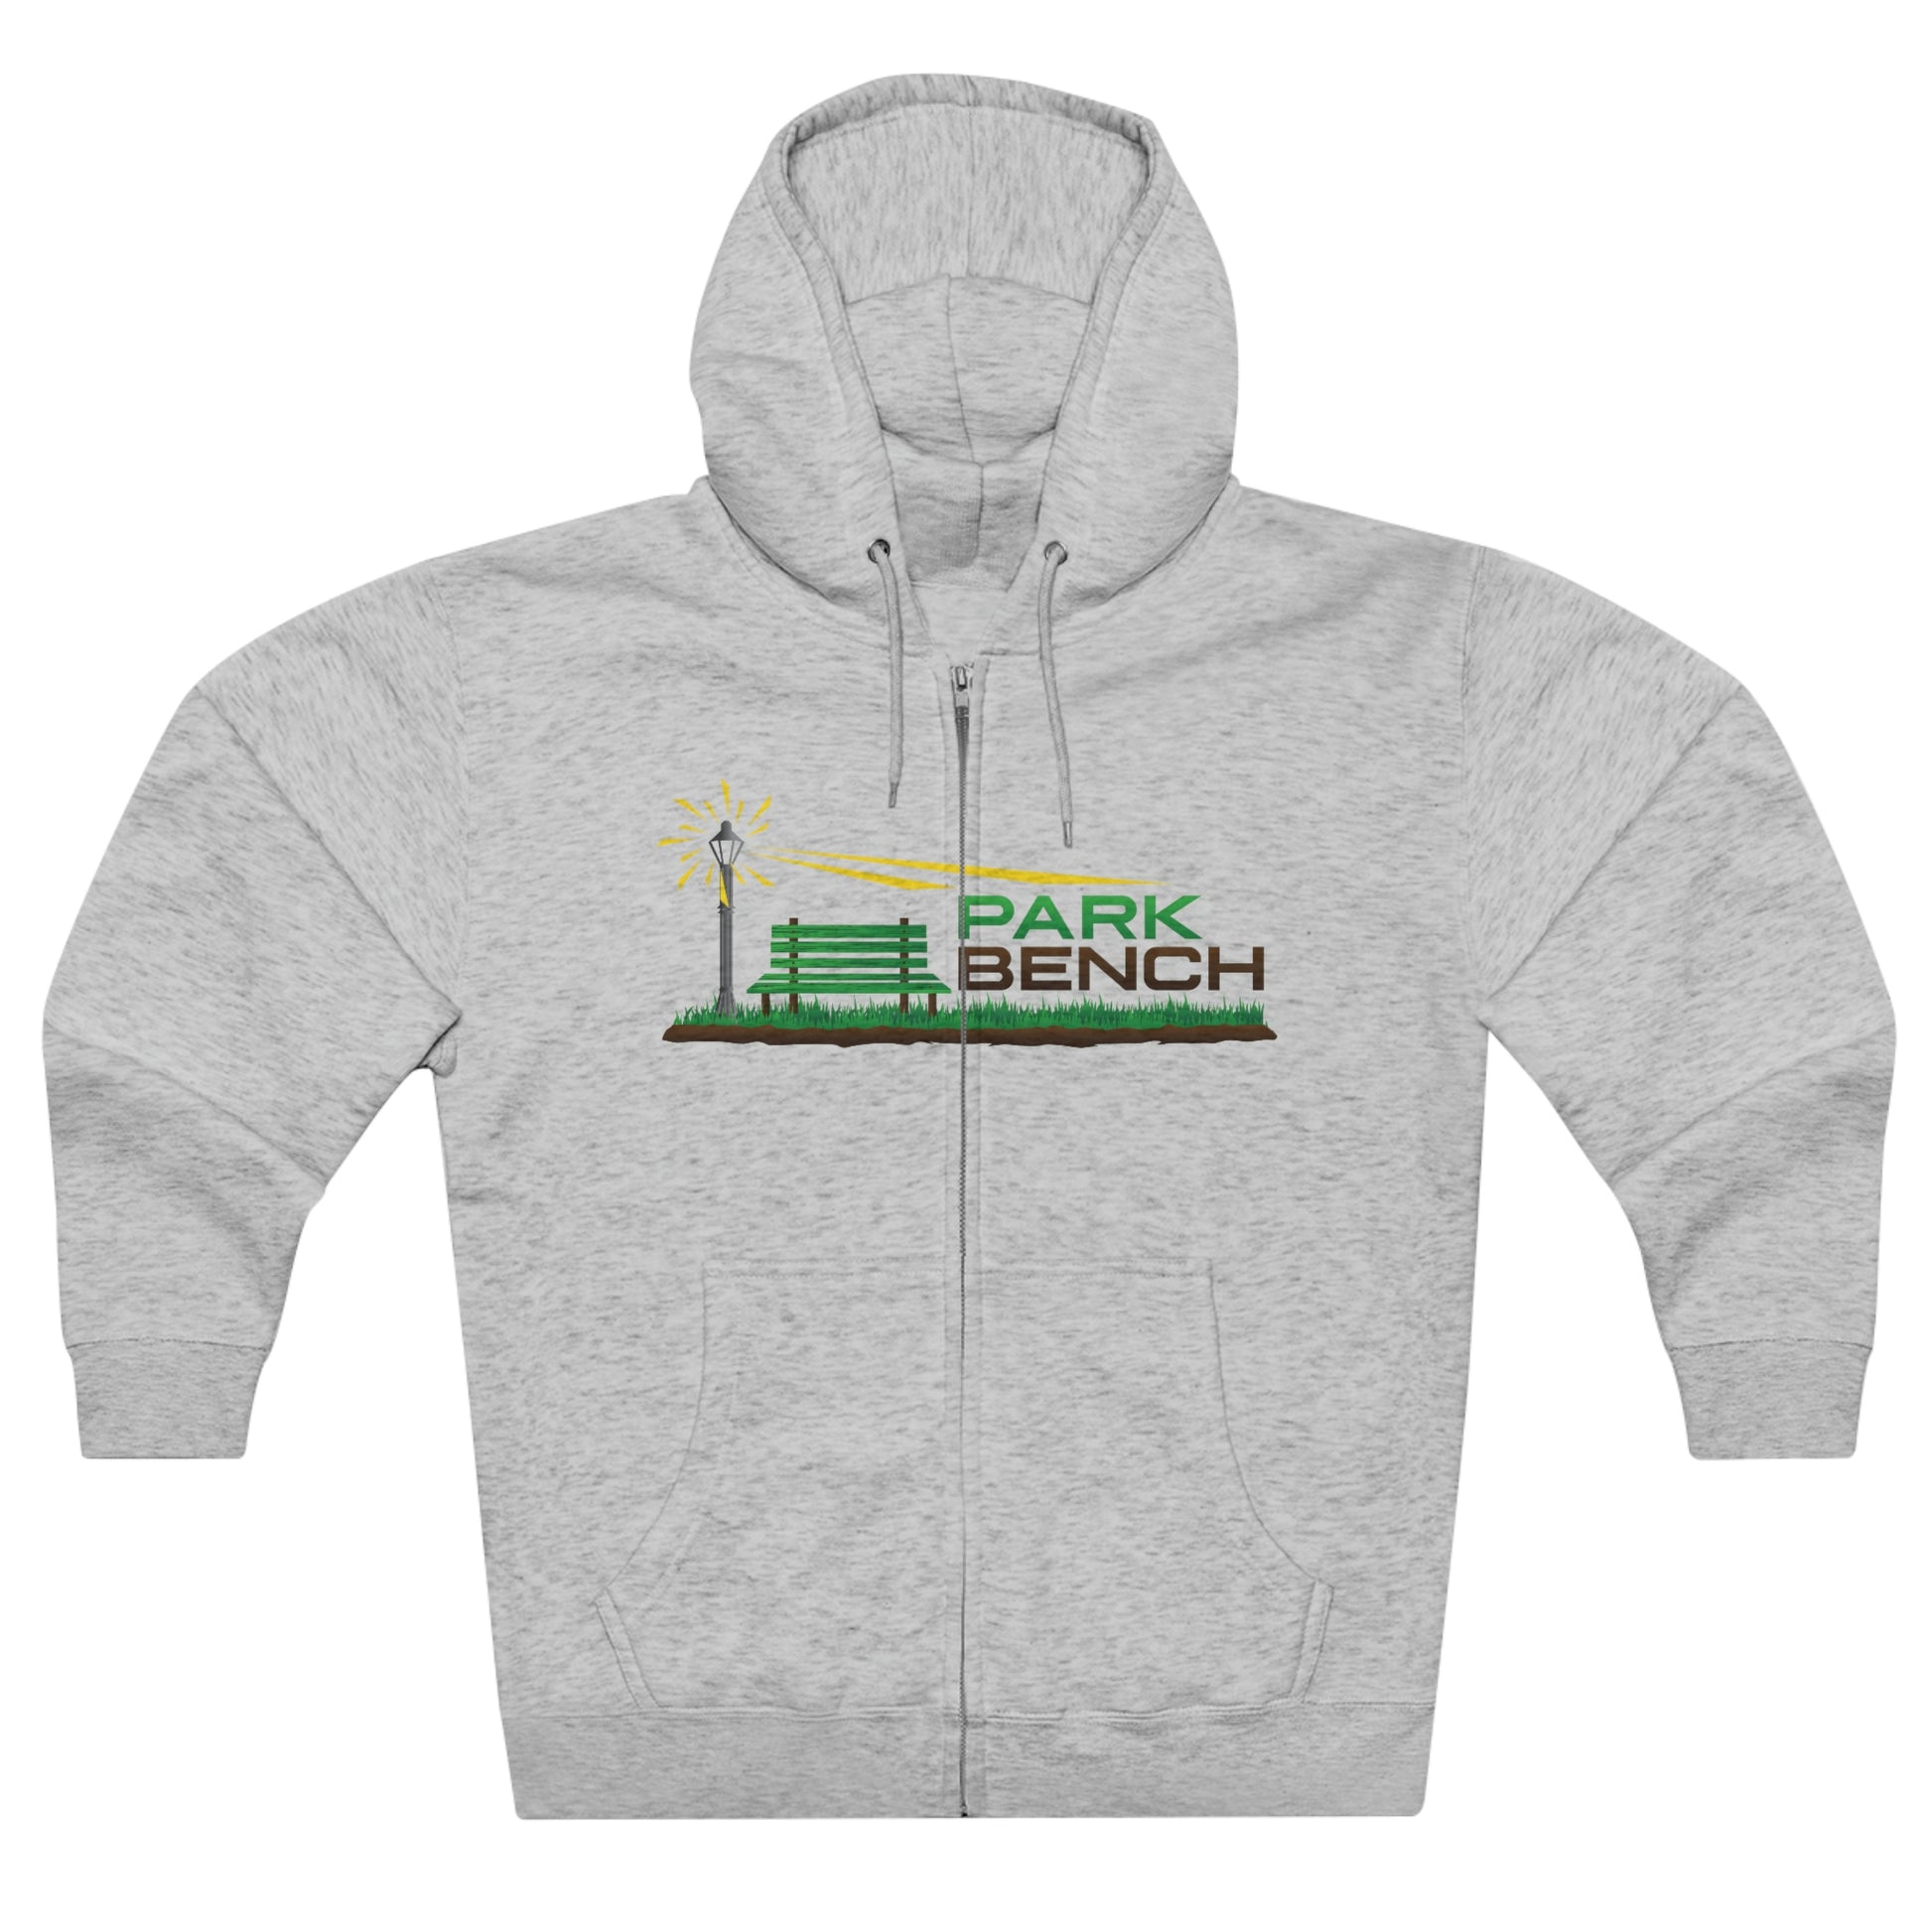 Bench Park Zip Hoodie Clothing – Premium Rich